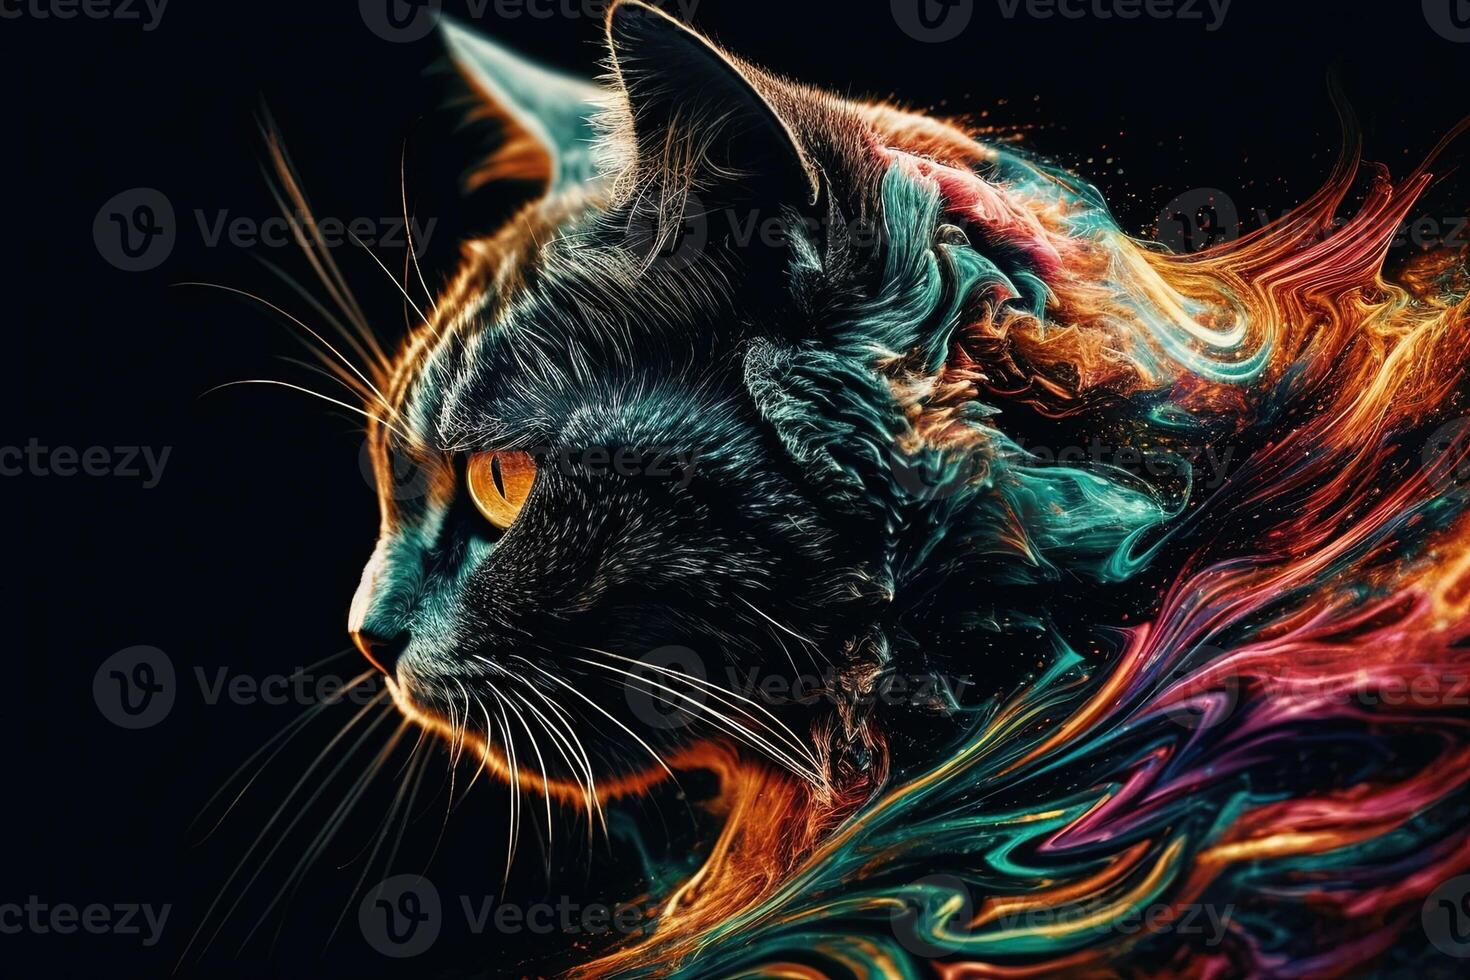 crazy psychedelic darkk natural Cat character illustration photo